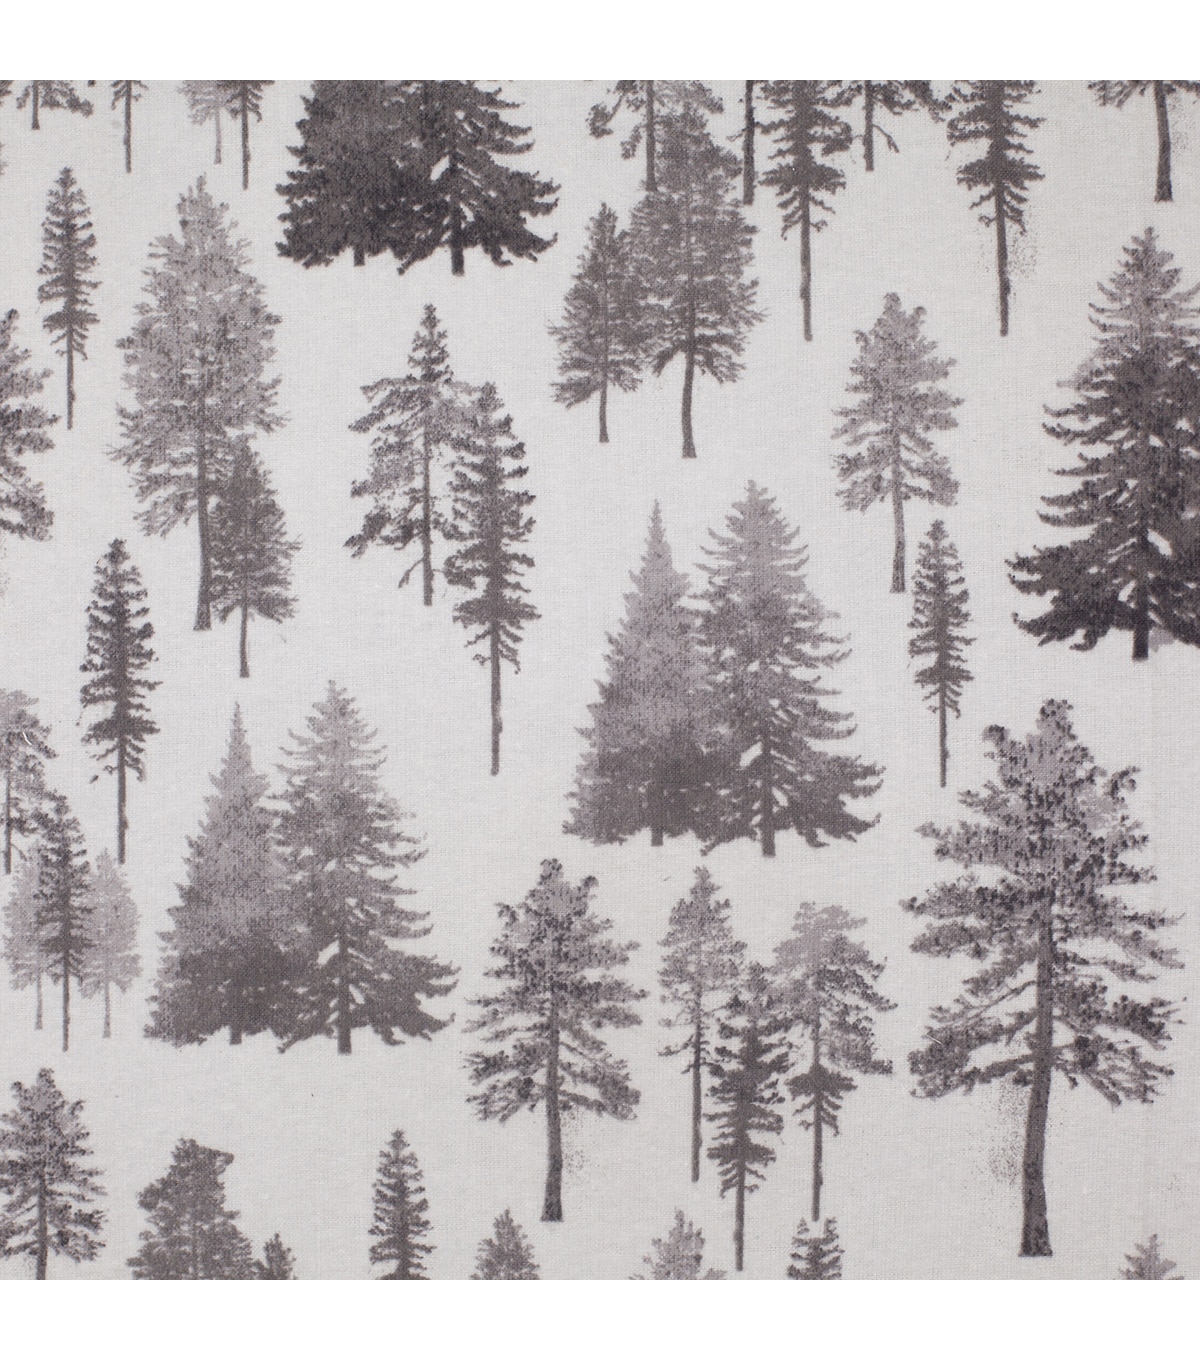 Super Snuggle Flannel Fabric-Gray On Gray Trees | JOANN